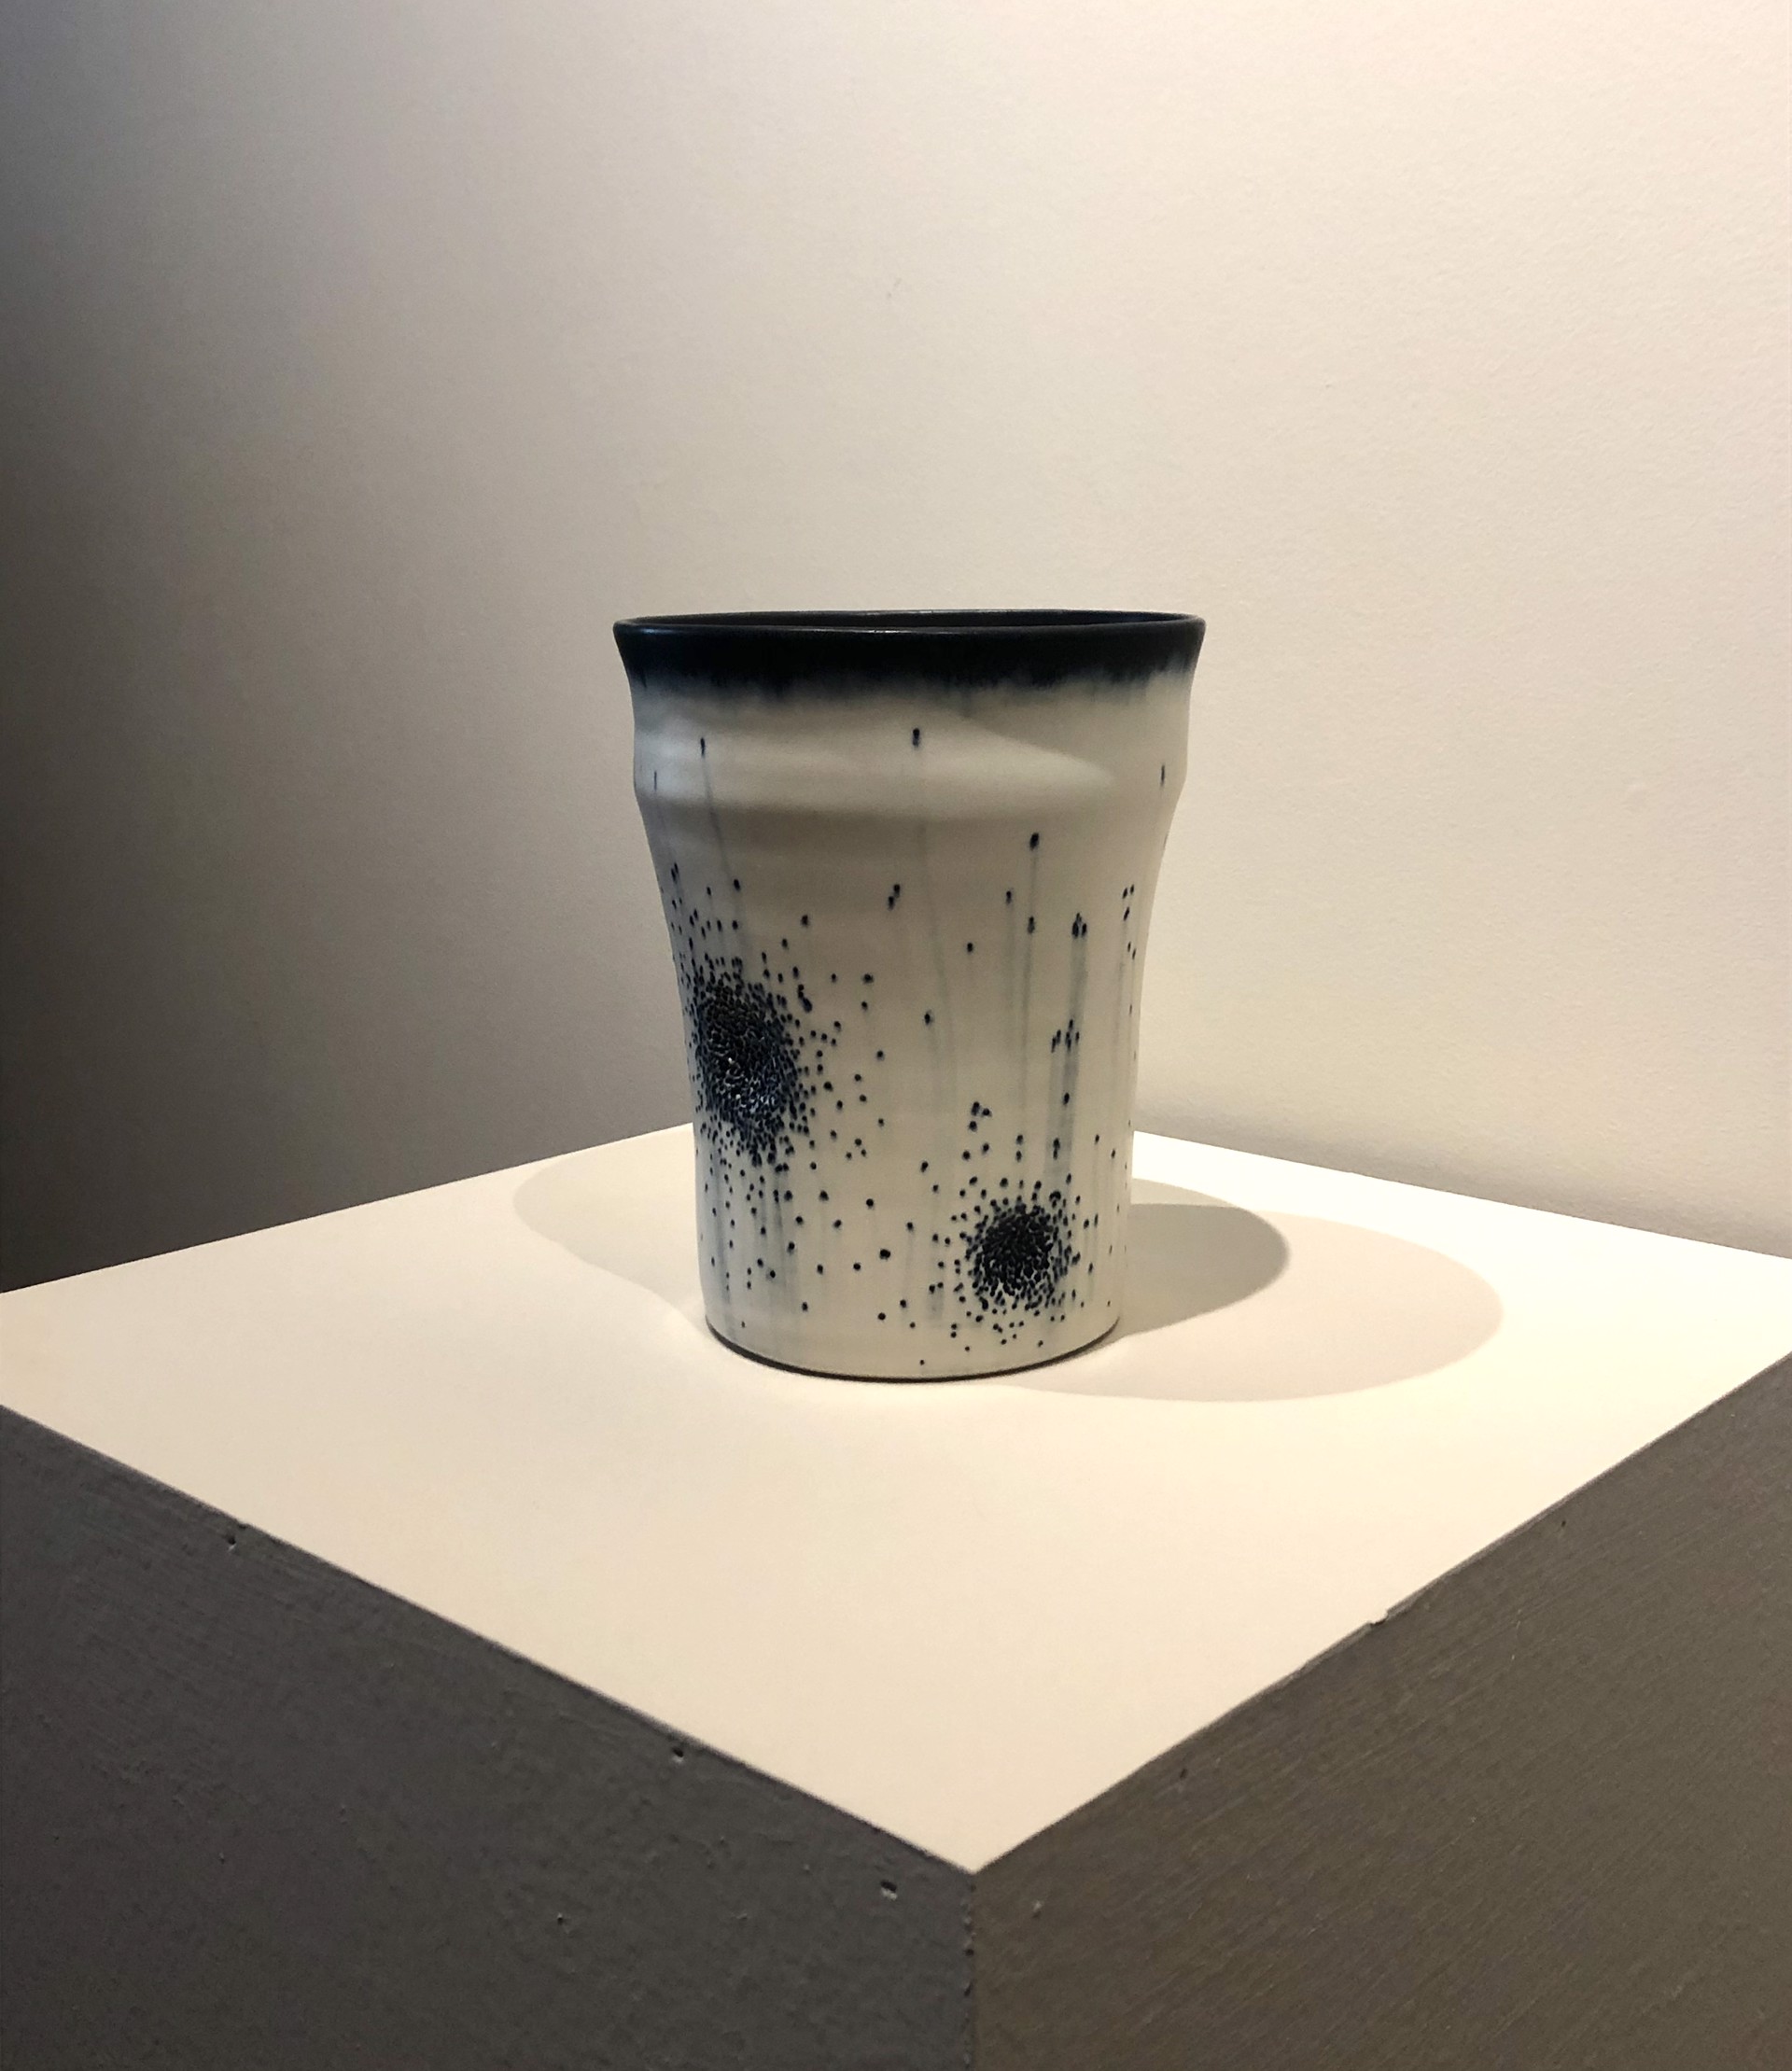 Halo + Marks: Vase by Désirée Petty